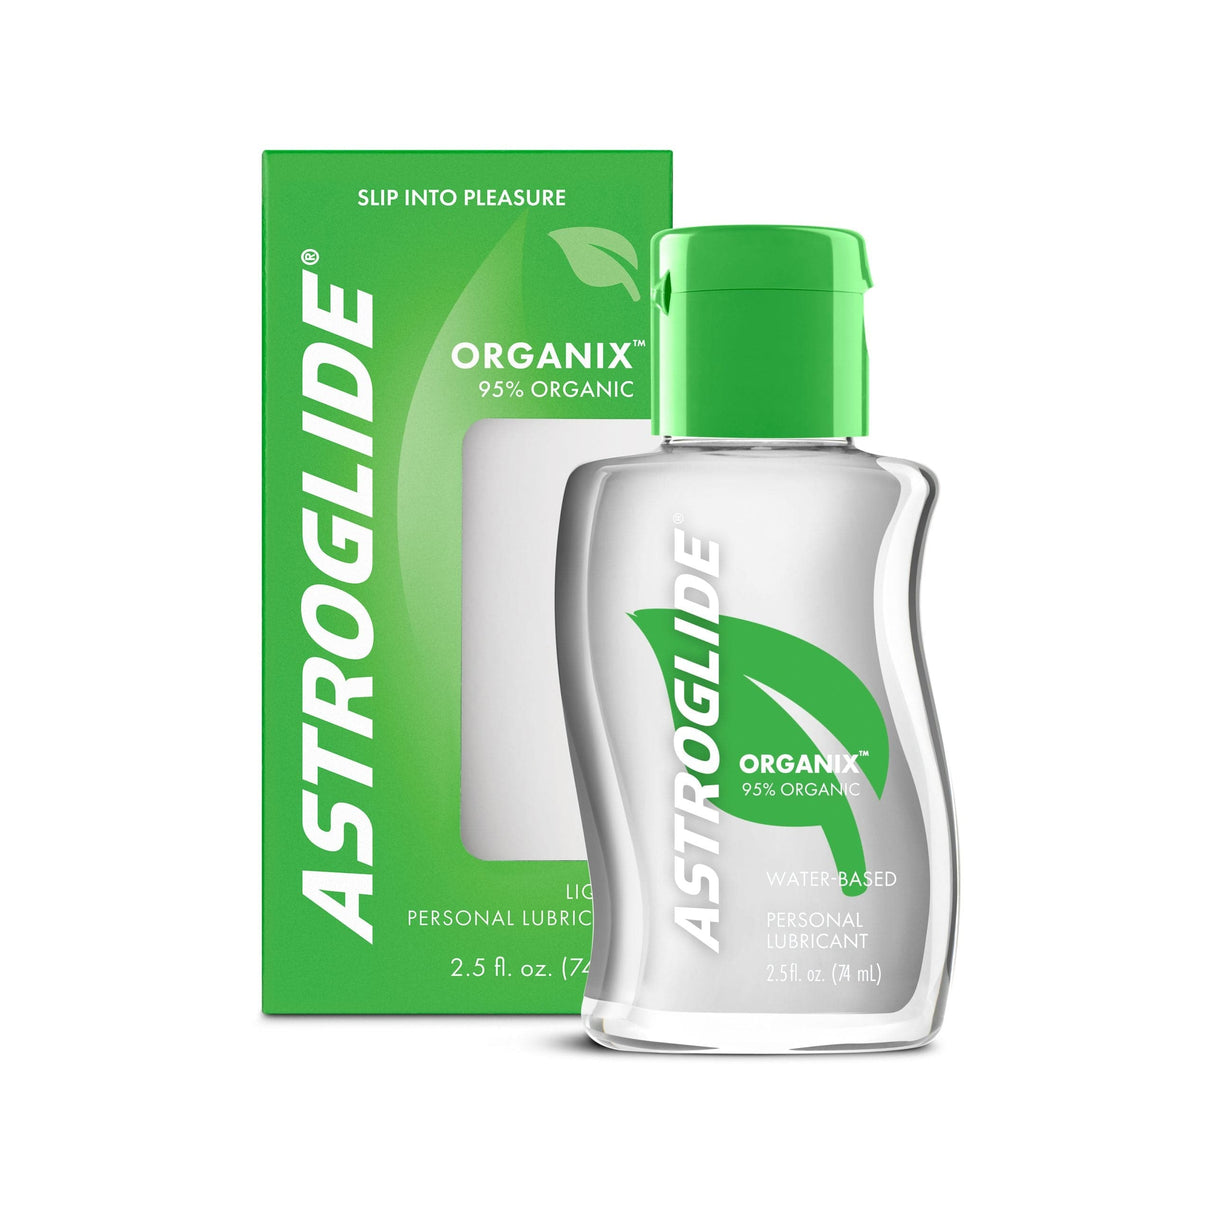 Astroglide - Organix Water Based Personal Lubricant    Lube (Water Based)